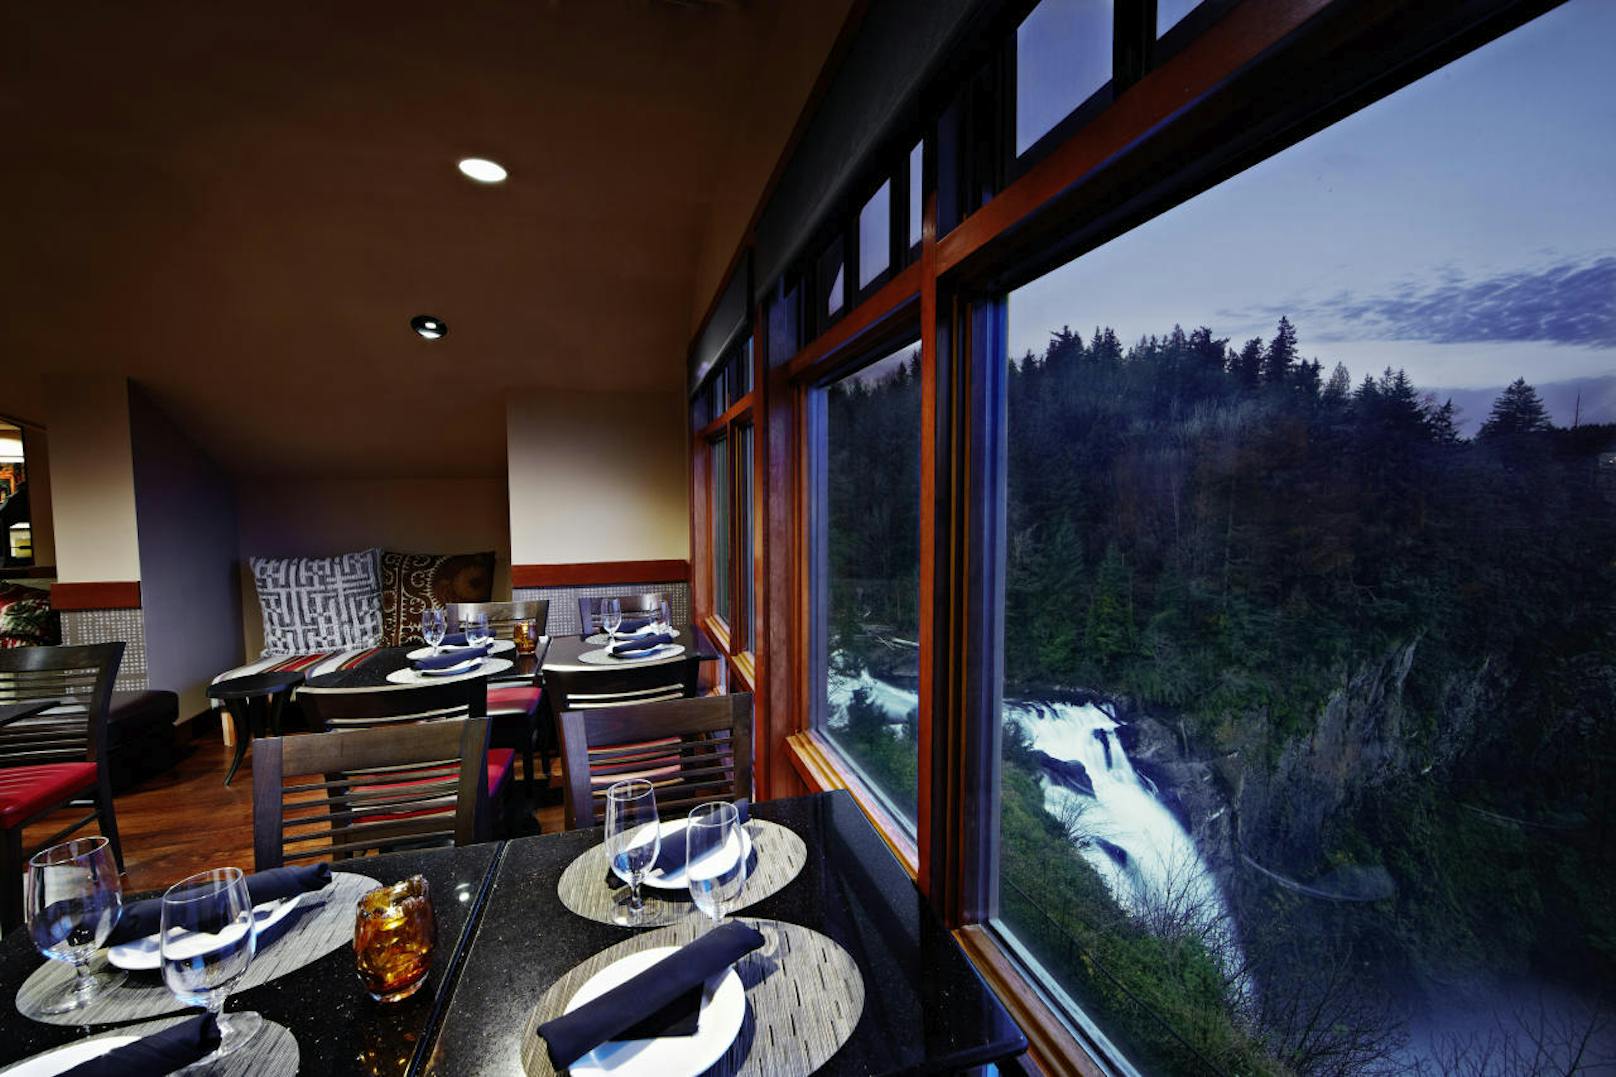 Salish Lodge & Spa - Snoqualmie, Washington, USA
>>> bekannt aus <b>"Twin Peaks"</b>